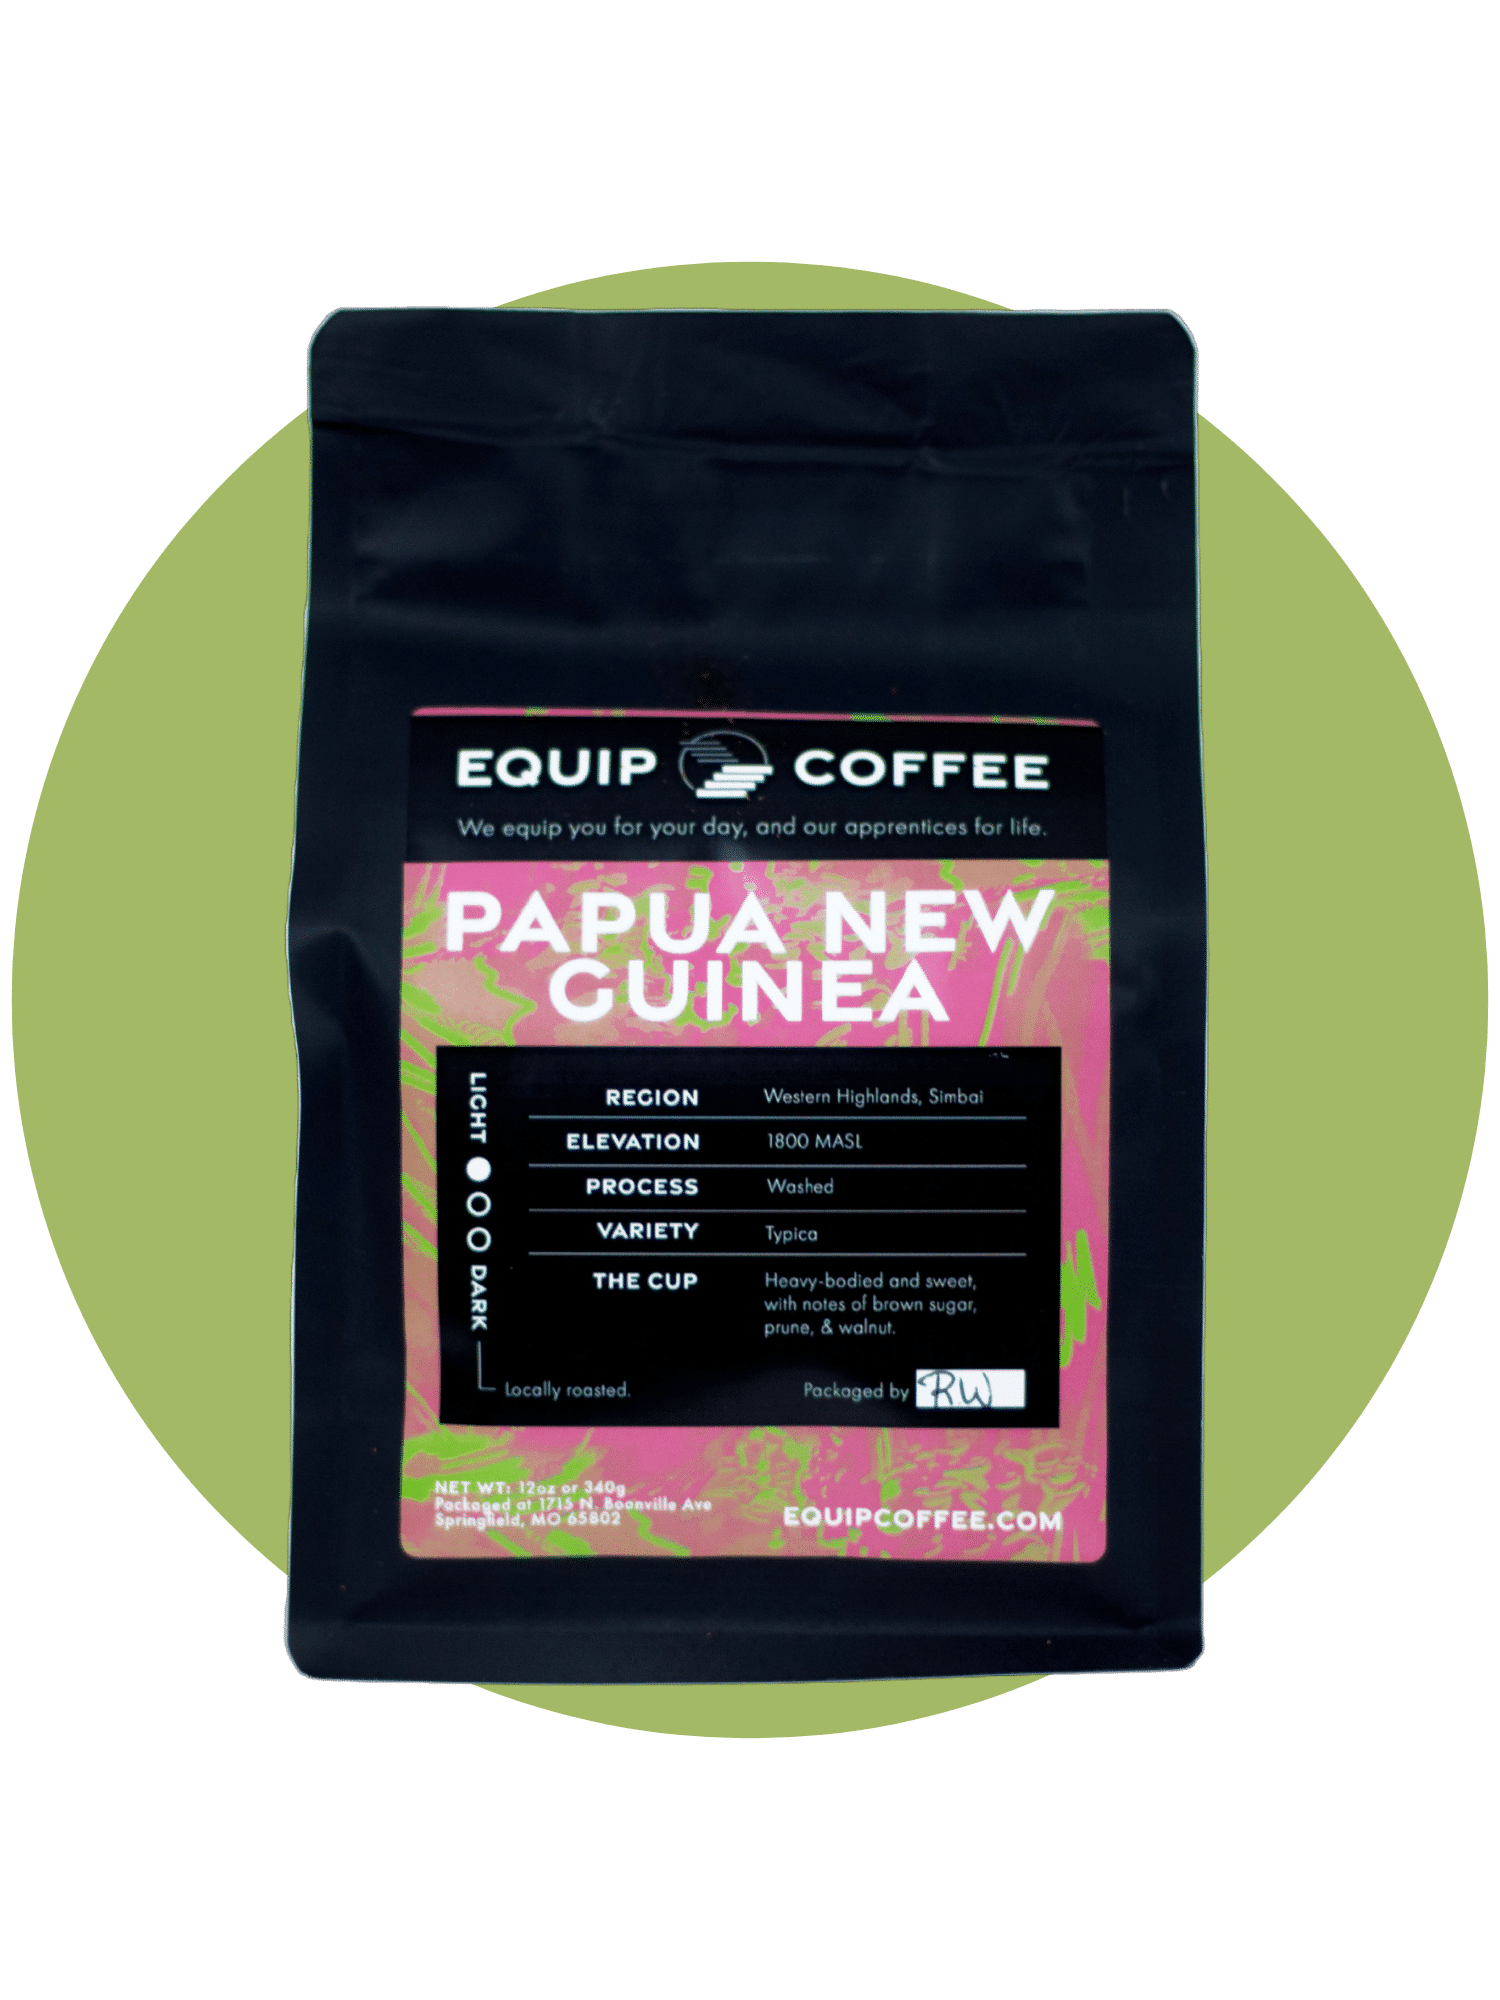 bag of Equip Coffee - Papua New Guinea